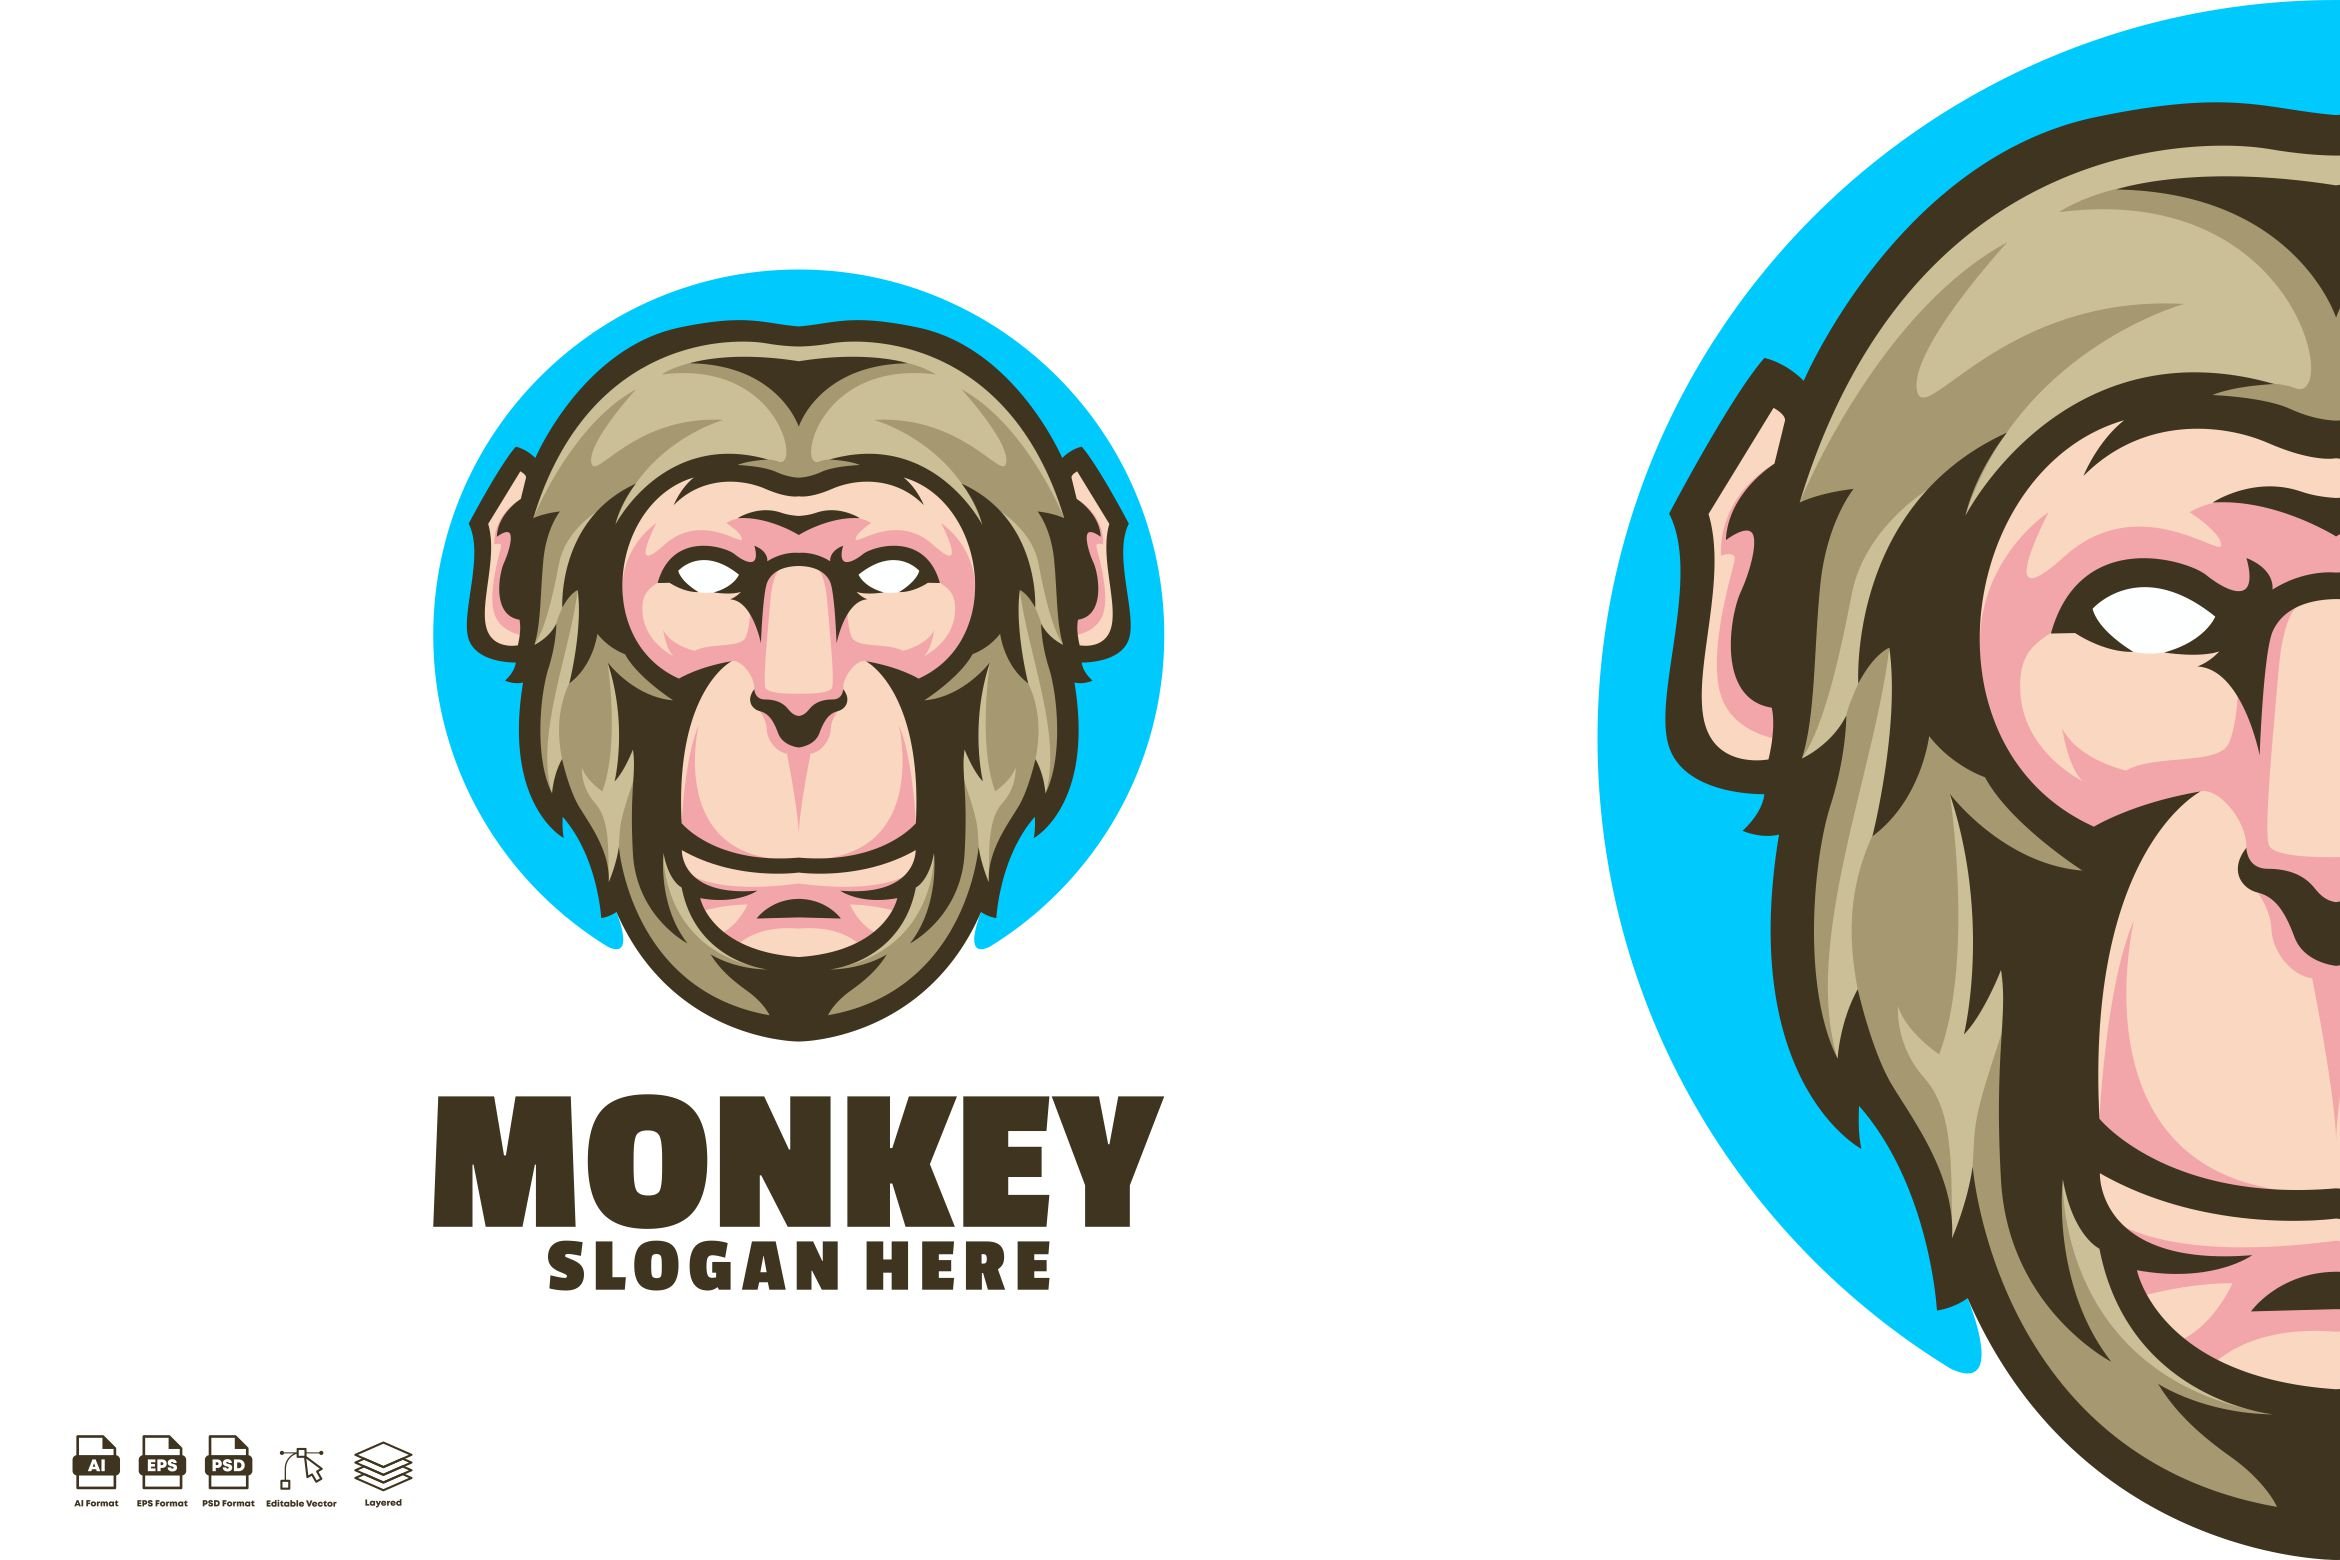 Monkey Mascot Logo Designs cover image.